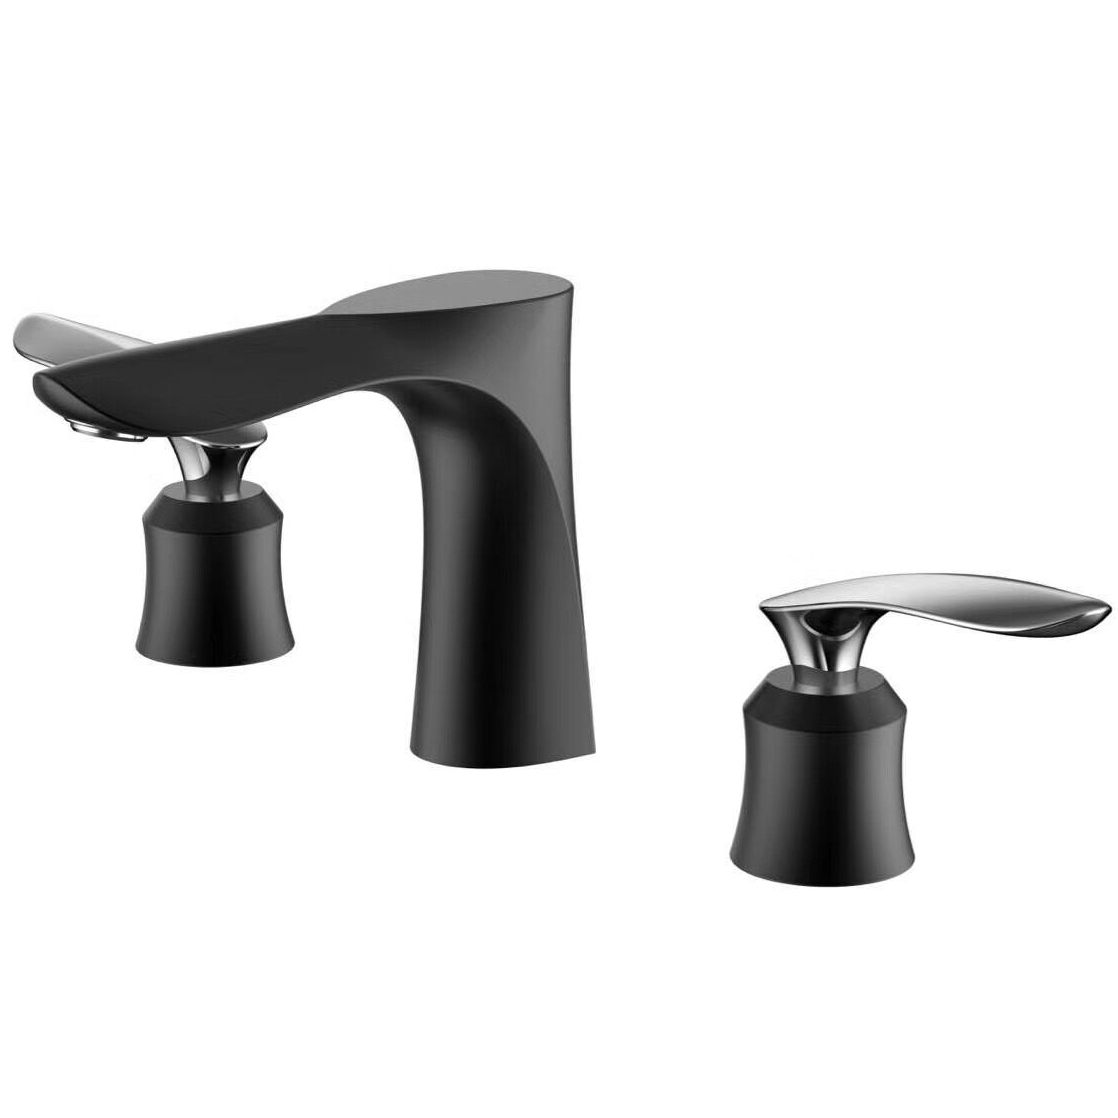 New Model Matt Black Double Handle Deck Mounted Bathroom Faucet